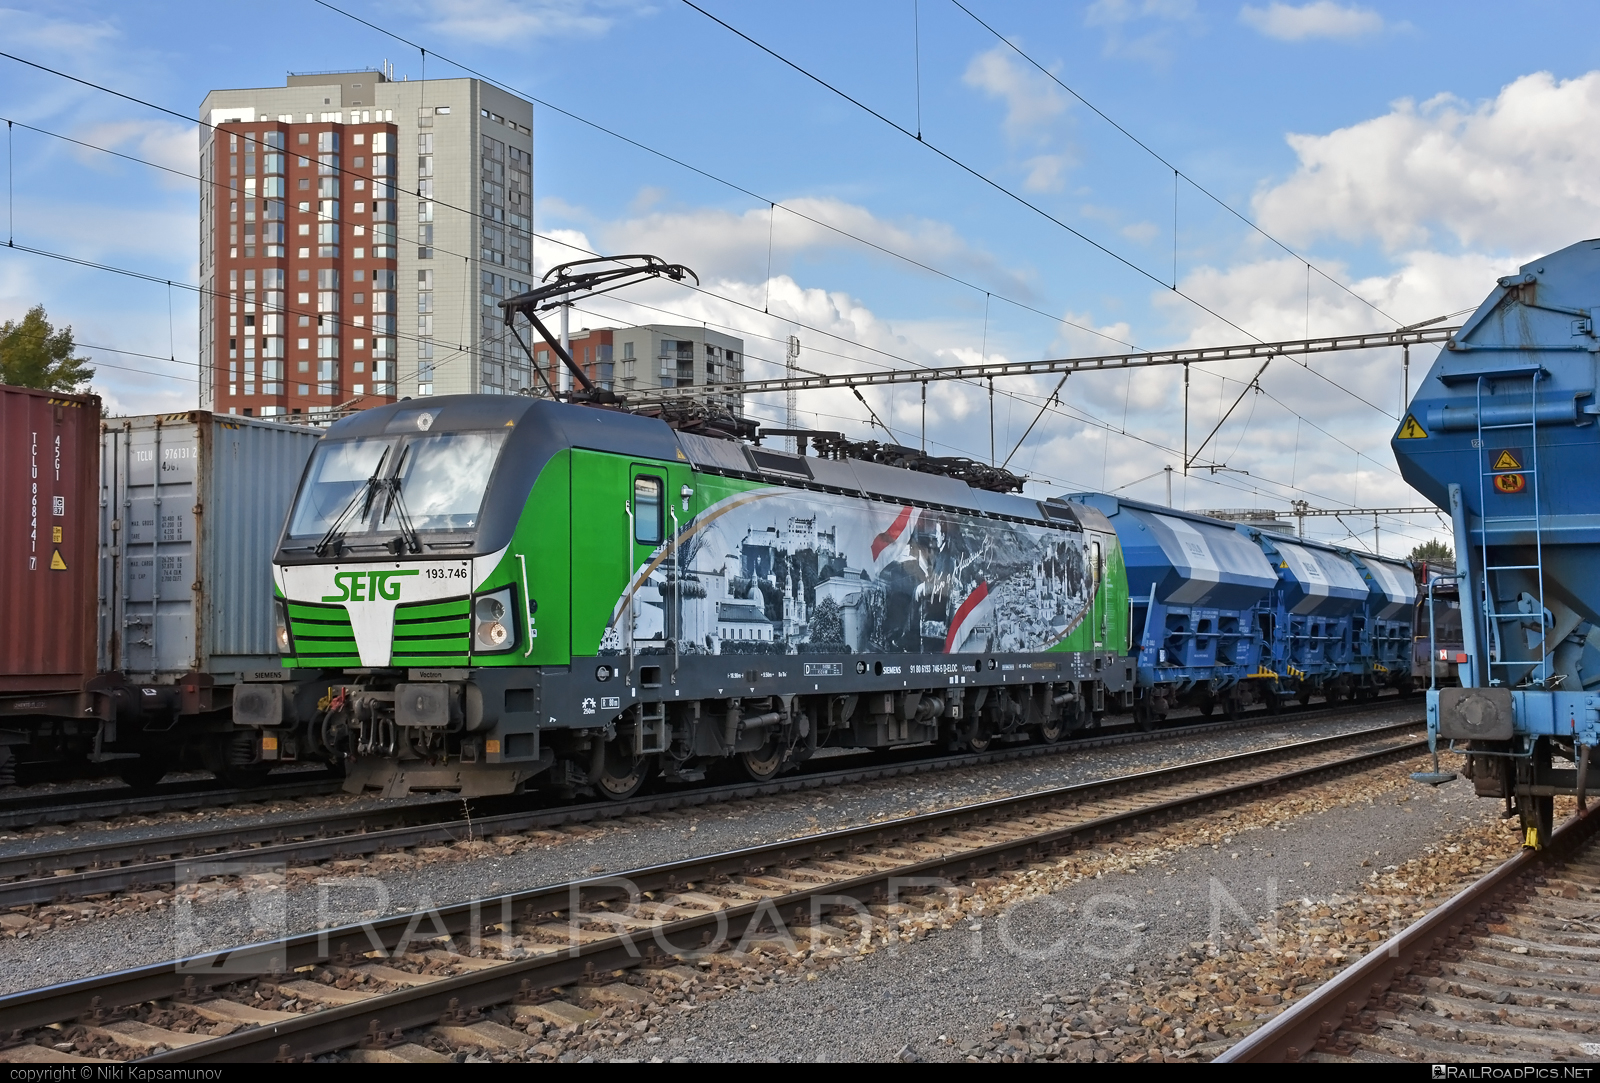 Siemens Vectron MS - 193 746 operated by Salzburger Eisenbahn Transportlogistik GmbH #SalzburgerEisenbahnTransportlogistik #SalzburgerEisenbahnTransportlogistikGmbH #duslo #ell #ellgermany #eloc #europeanlocomotiveleasing #hopperwagon #setg #siemens #siemensVectron #siemensVectronMS #vectron #vectronMS